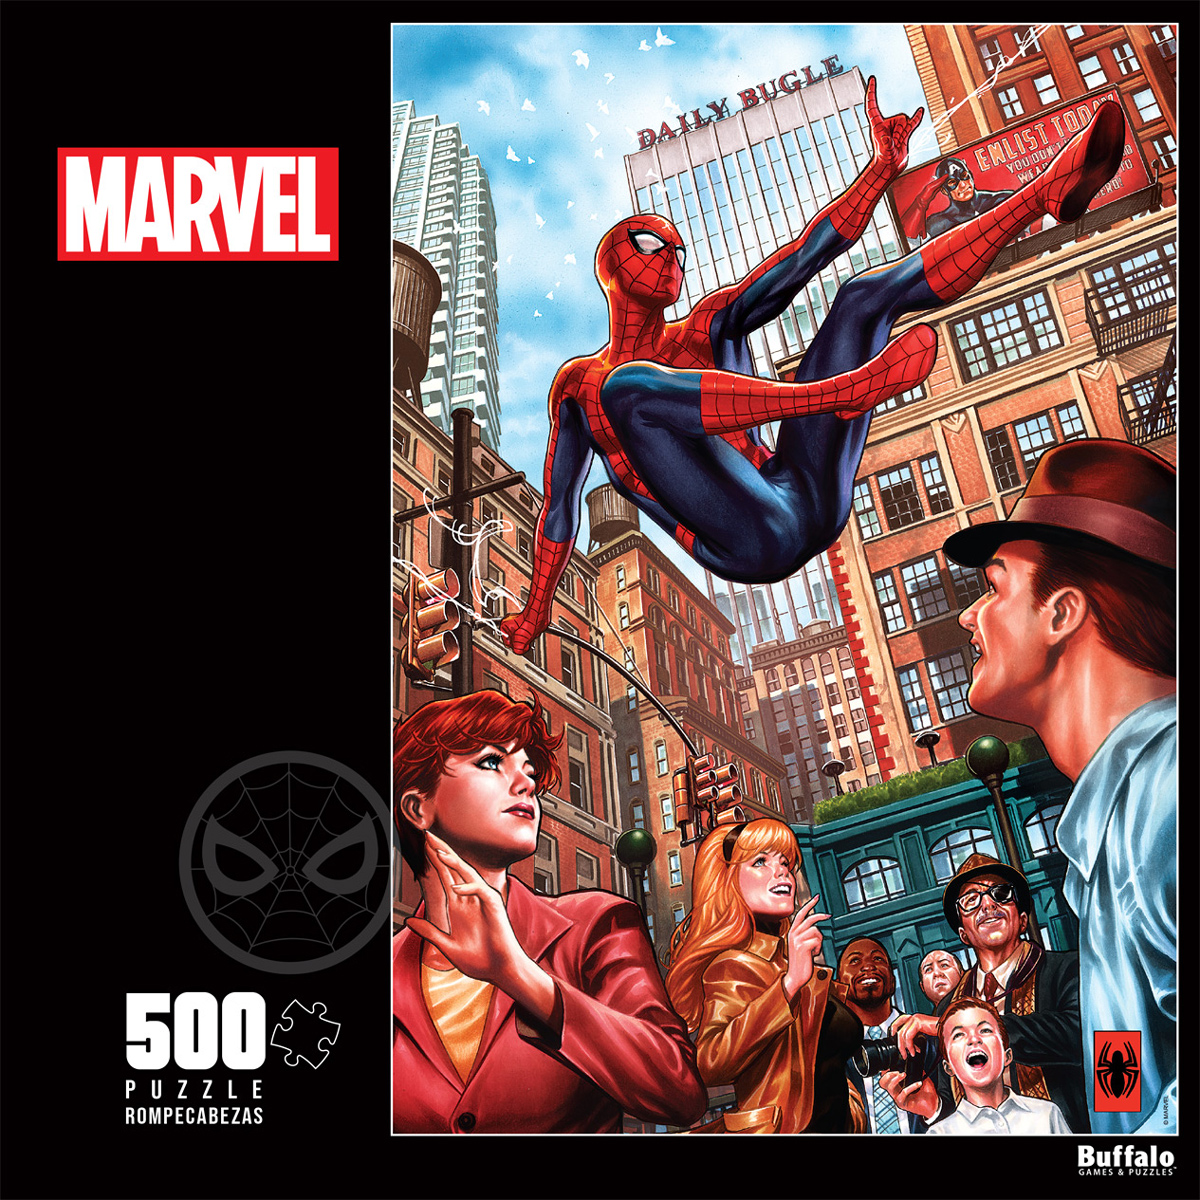 The Amazing Spider-Man #24 Variant